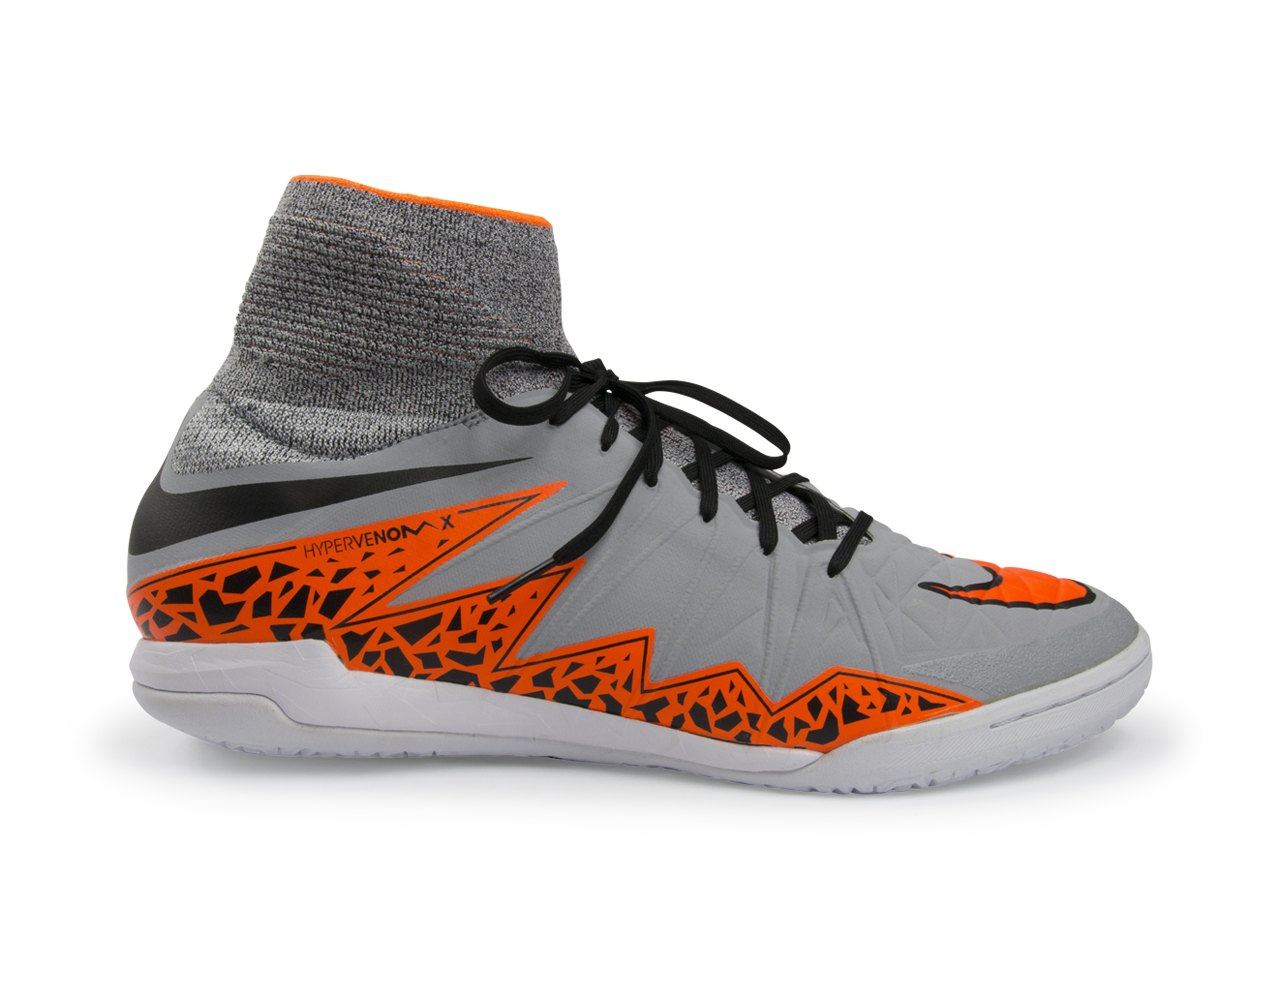 Nike Men's Hypervenom Proximo Indoor Soccer Shoes Wolf Grey/Total Orange/Black